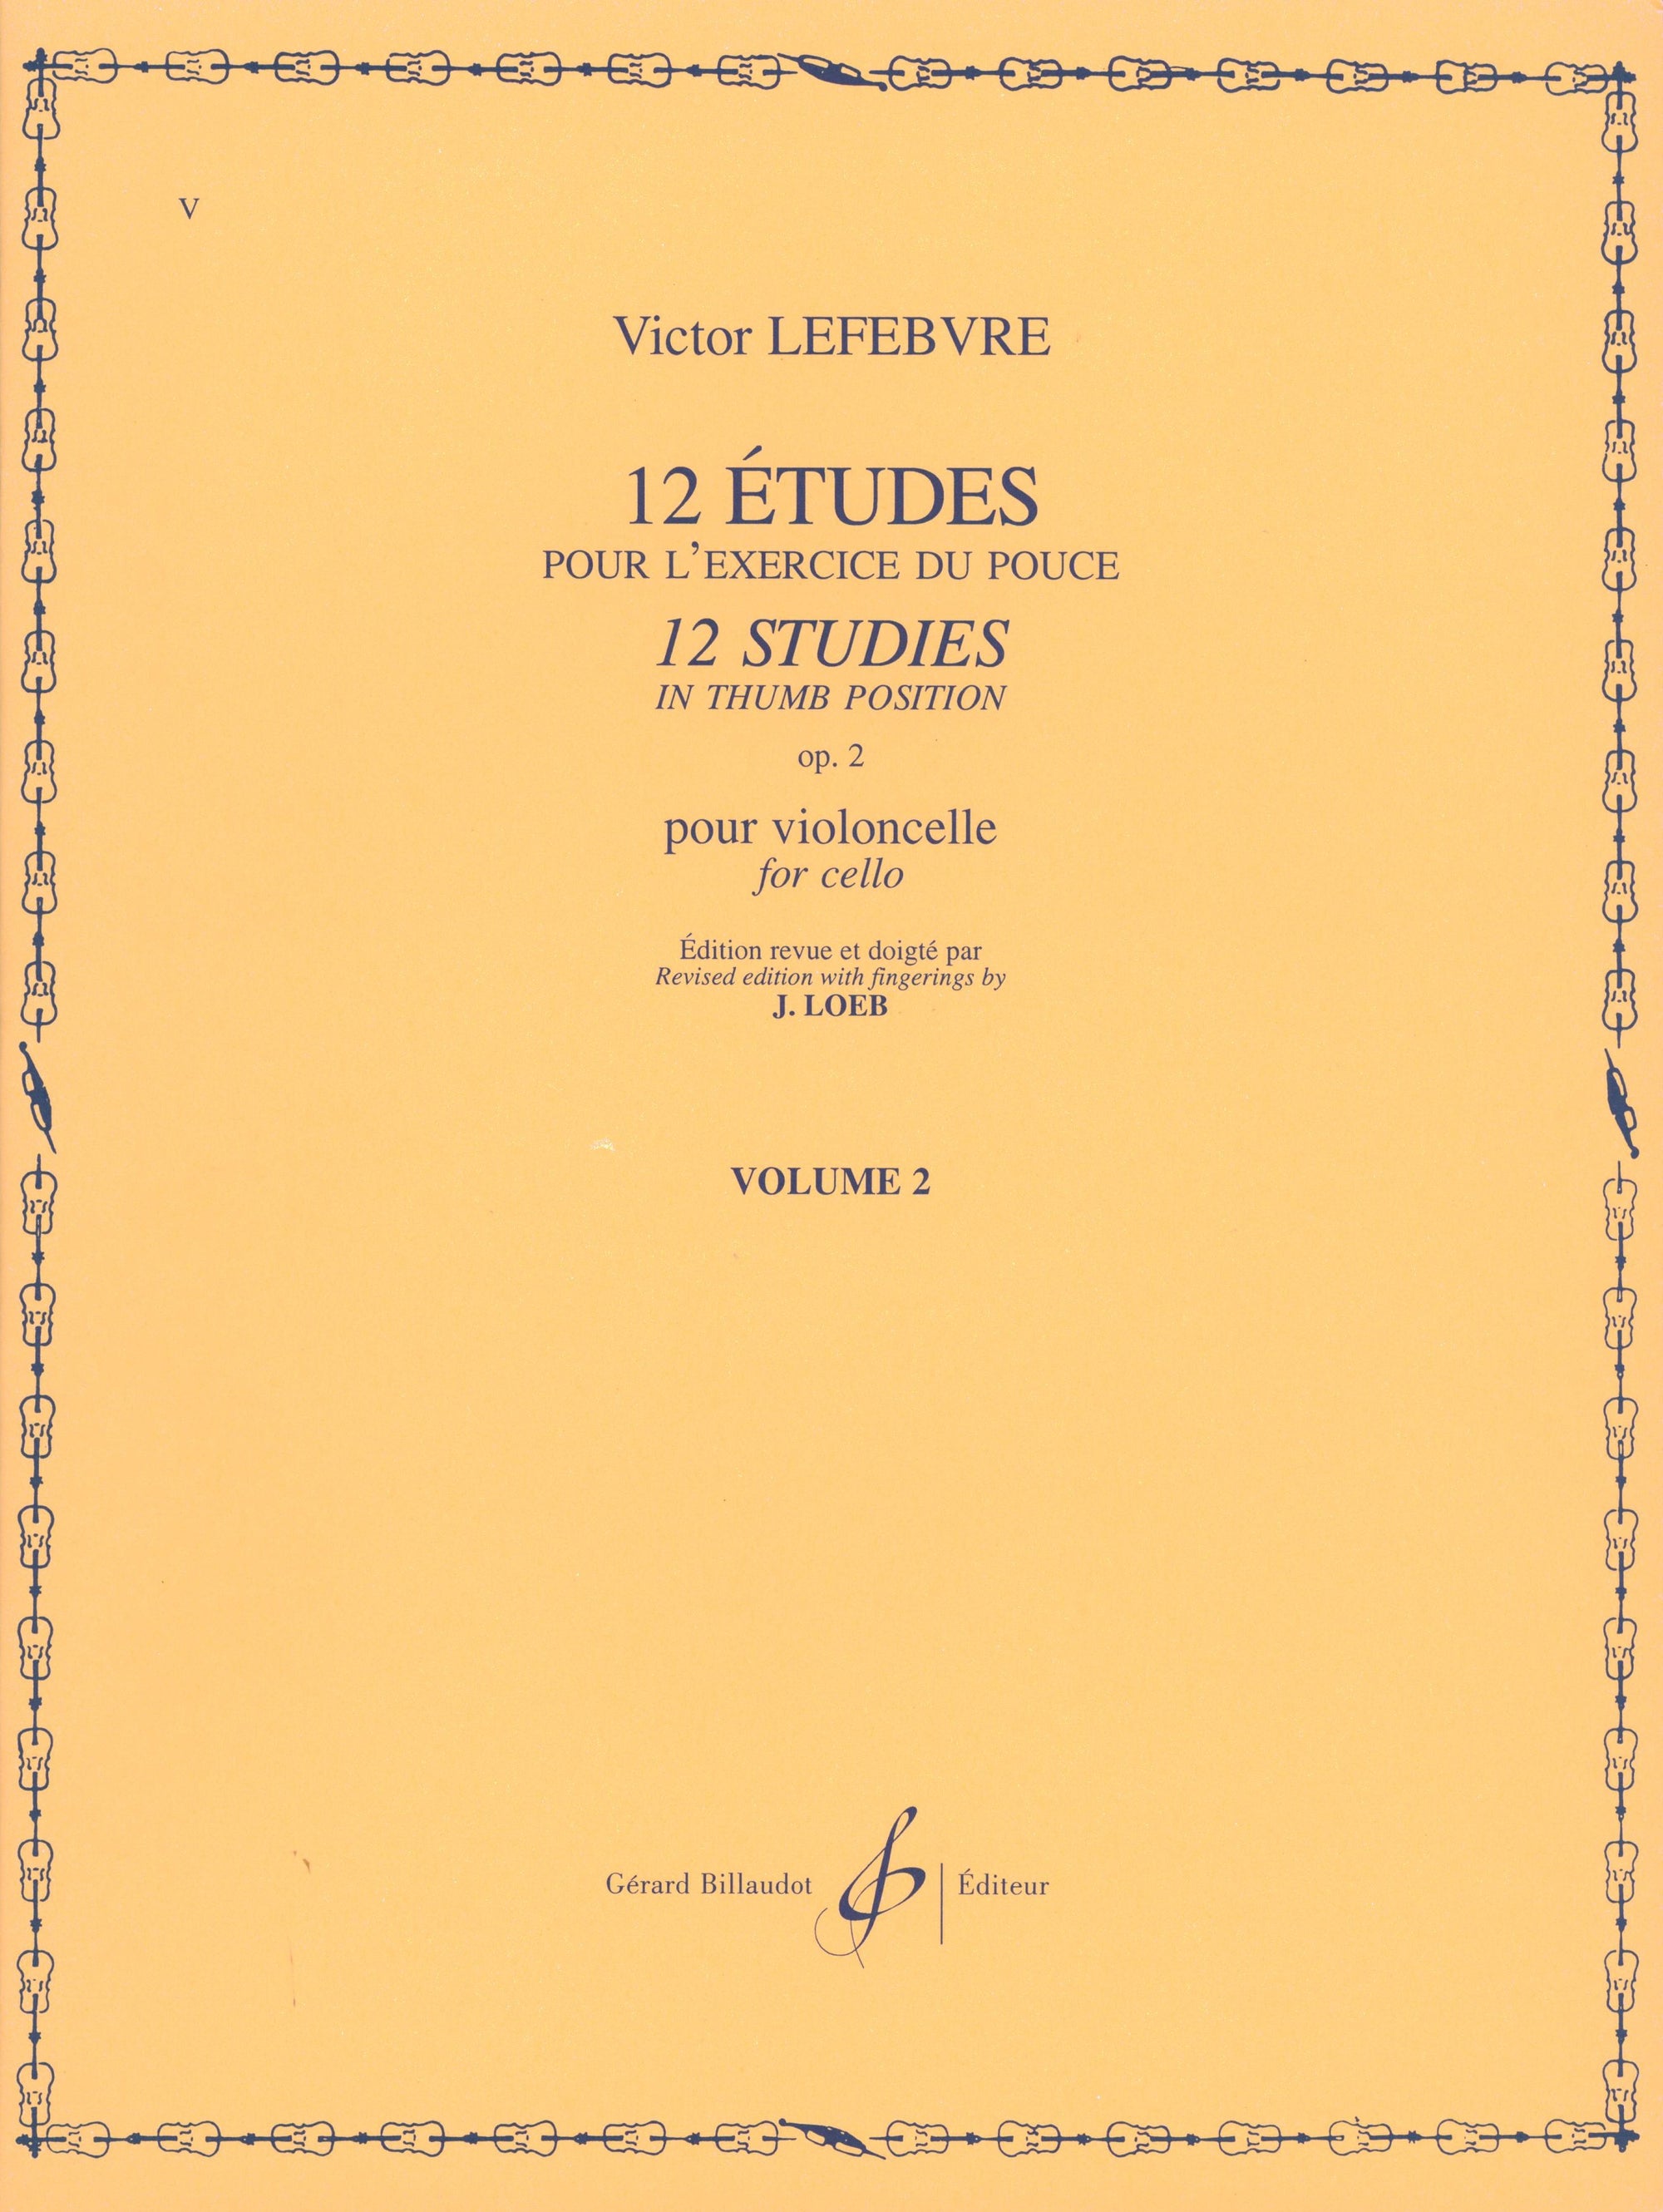 Lefebvre: 12 Études in Thumb Position, Op. 2 - Volume 2 (Nos. 7-12)